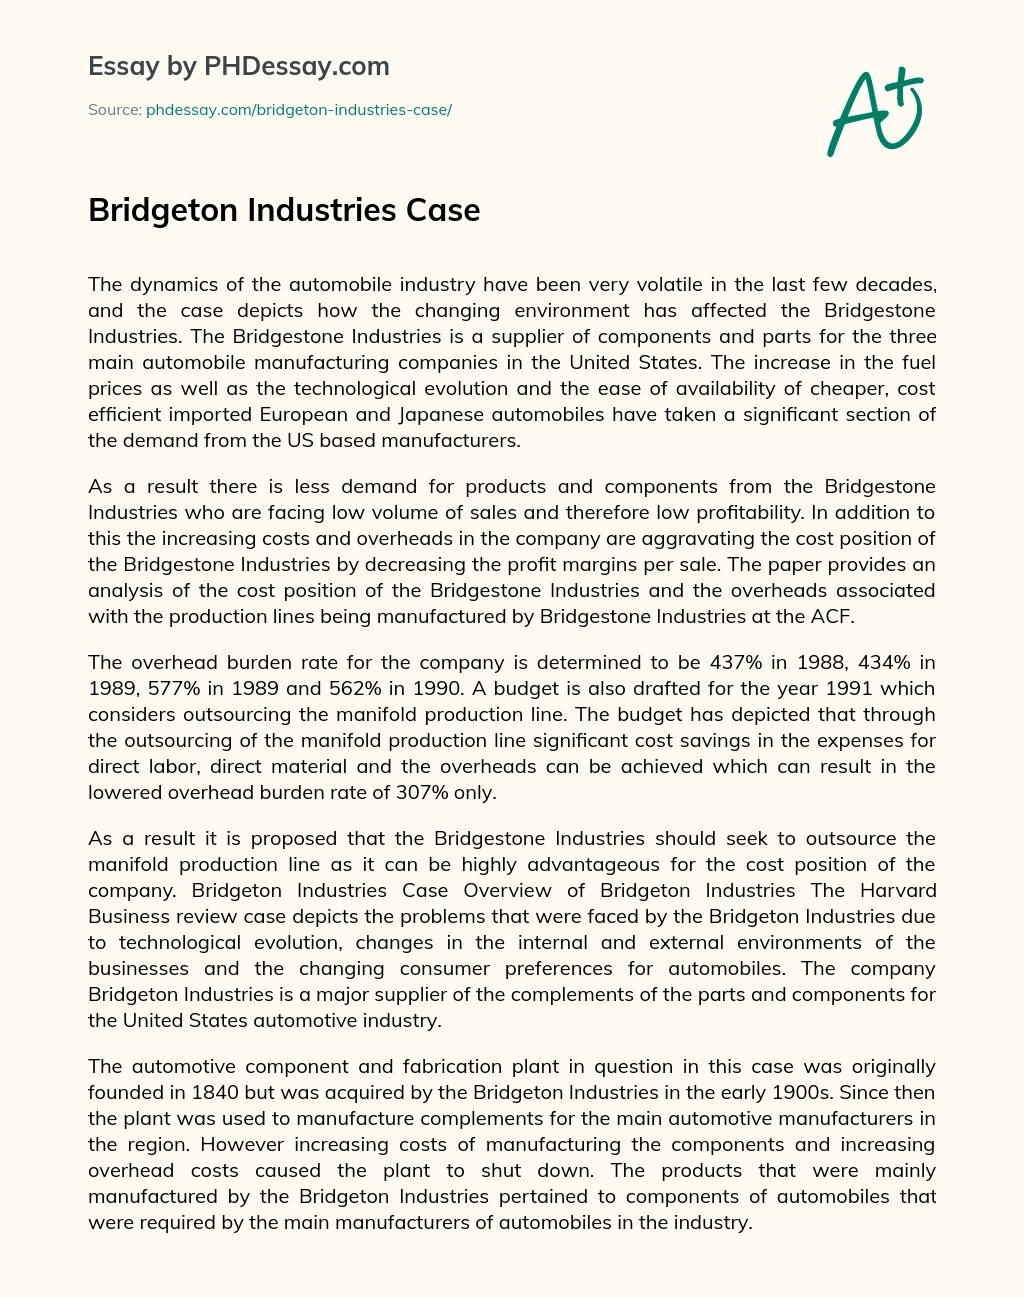 Bridgeton Industries Case essay